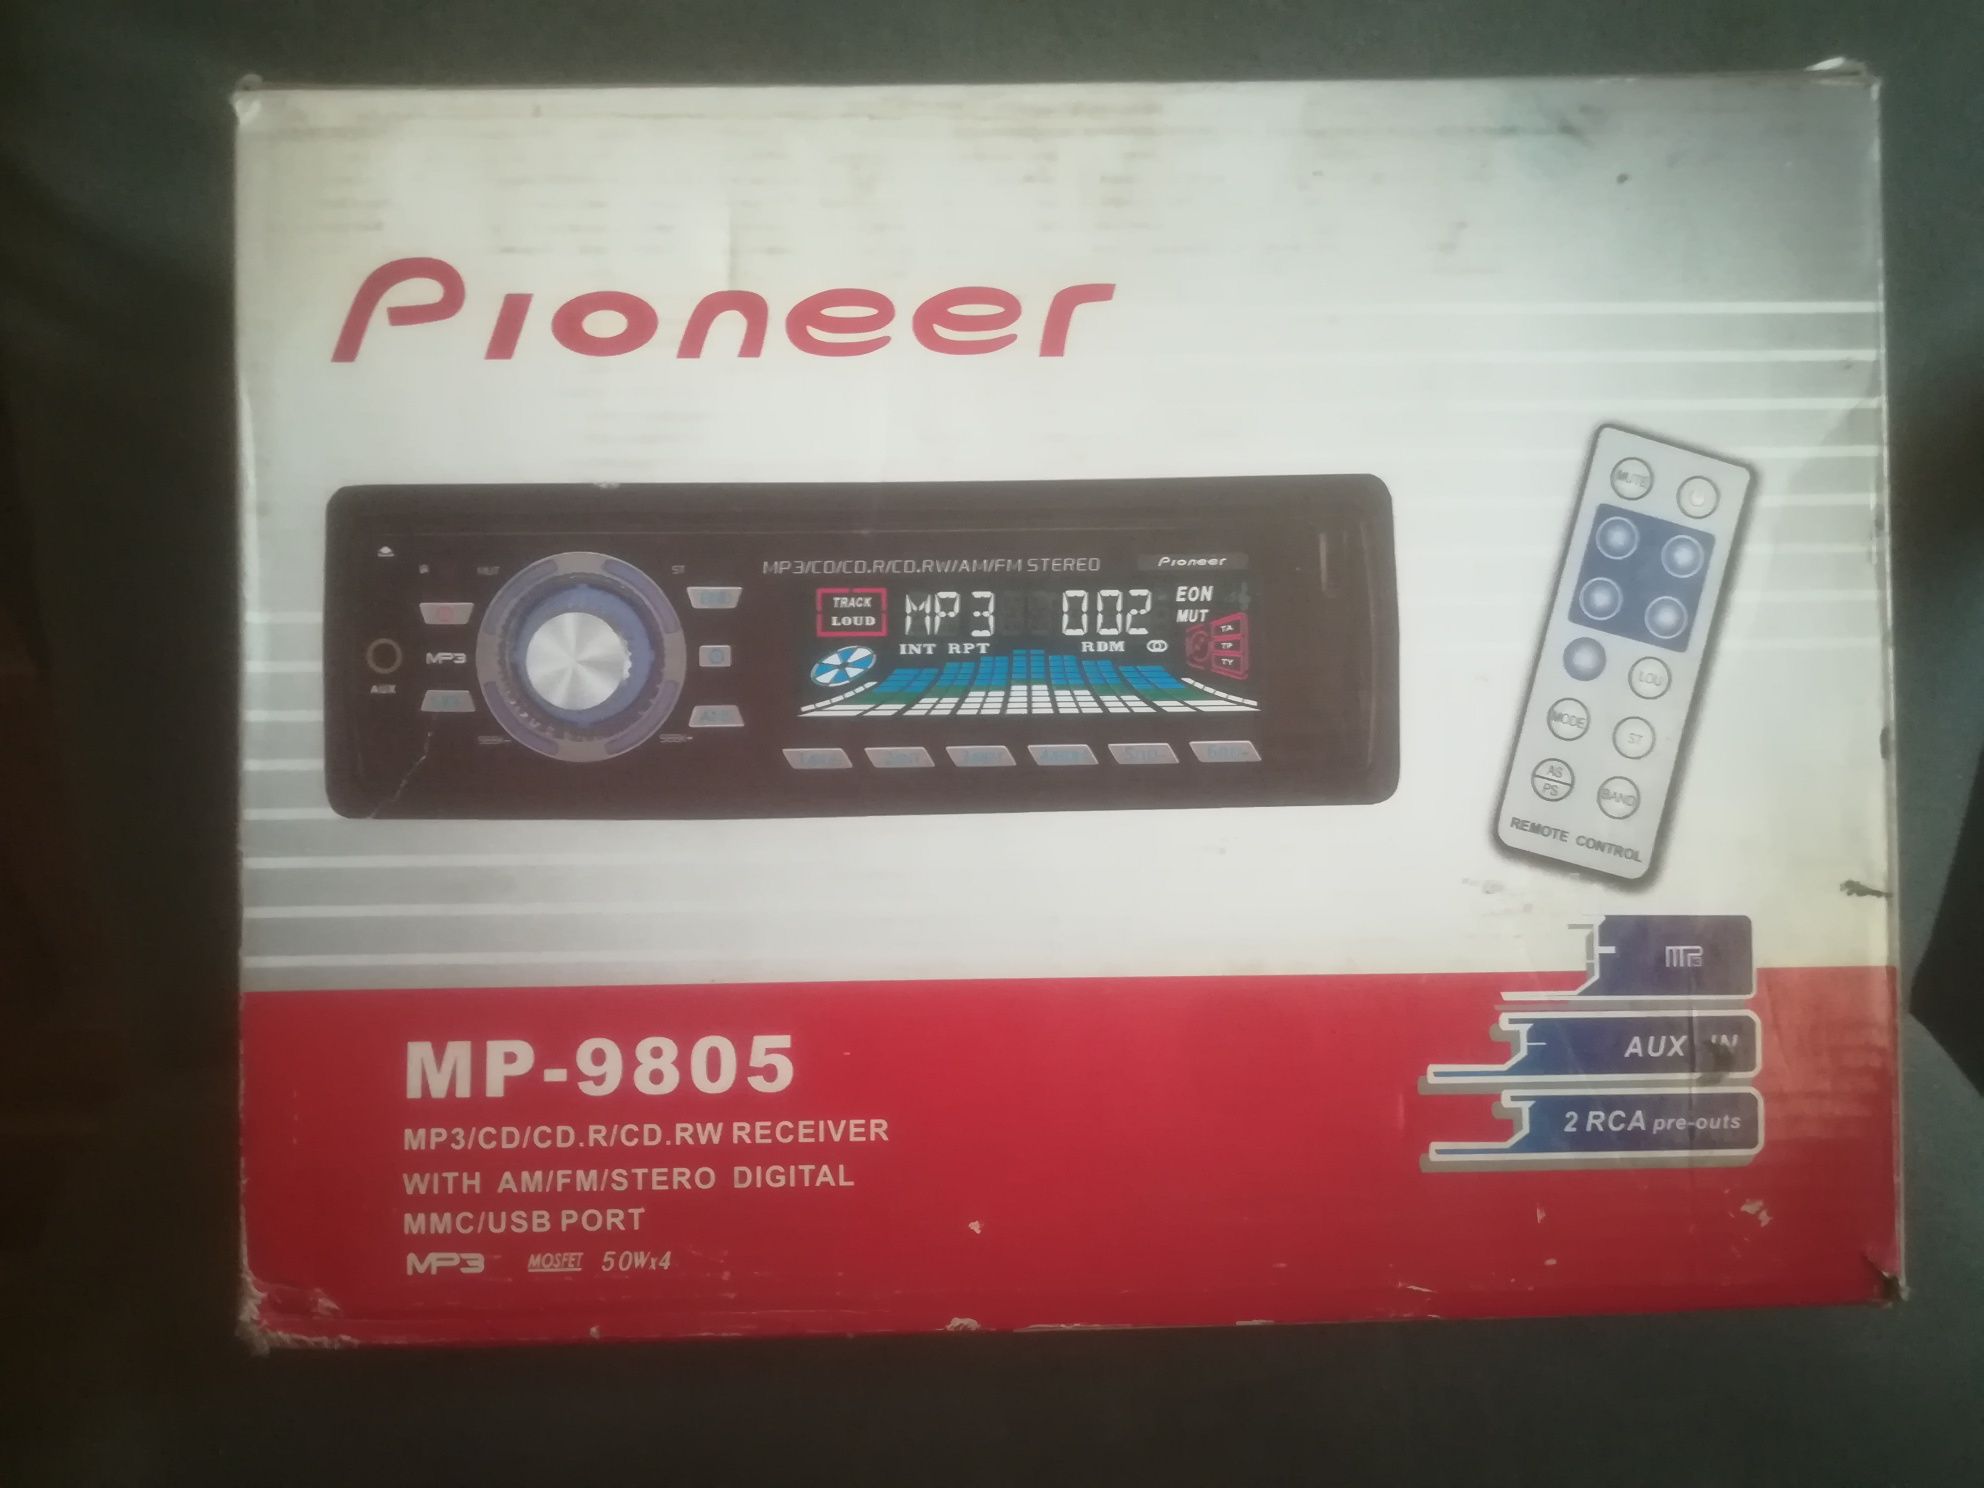 Pioneer mp-9805 usb port 50вт